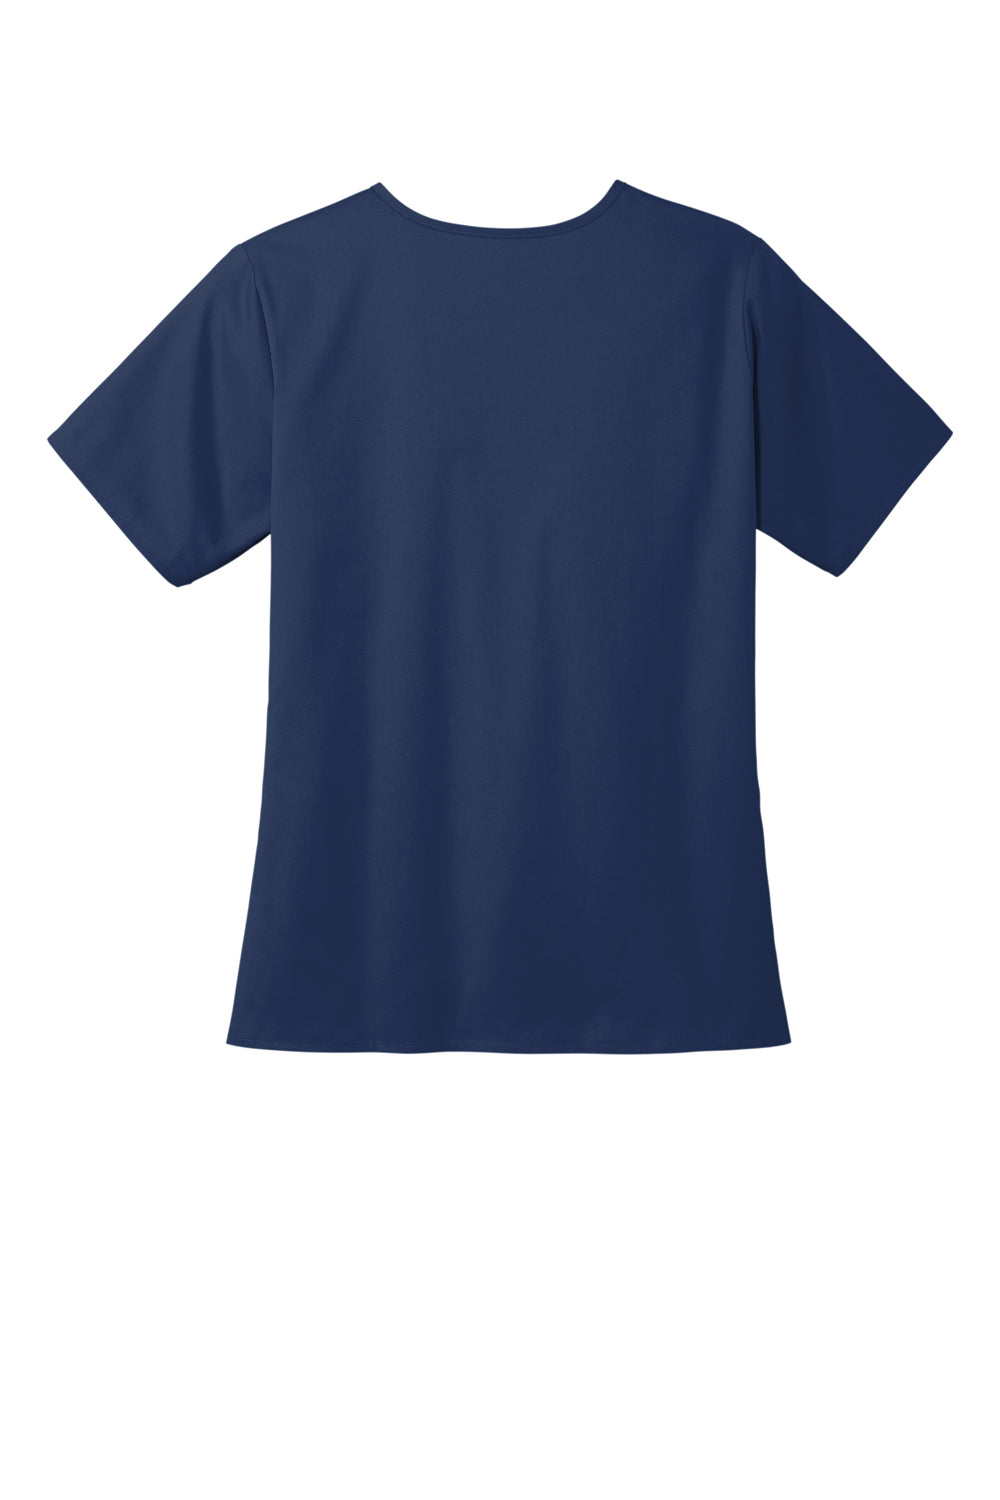 Wonderwink WW4560 WorkFlex Short Sleeve V-Neck Shirt Navy Blue Flat Back